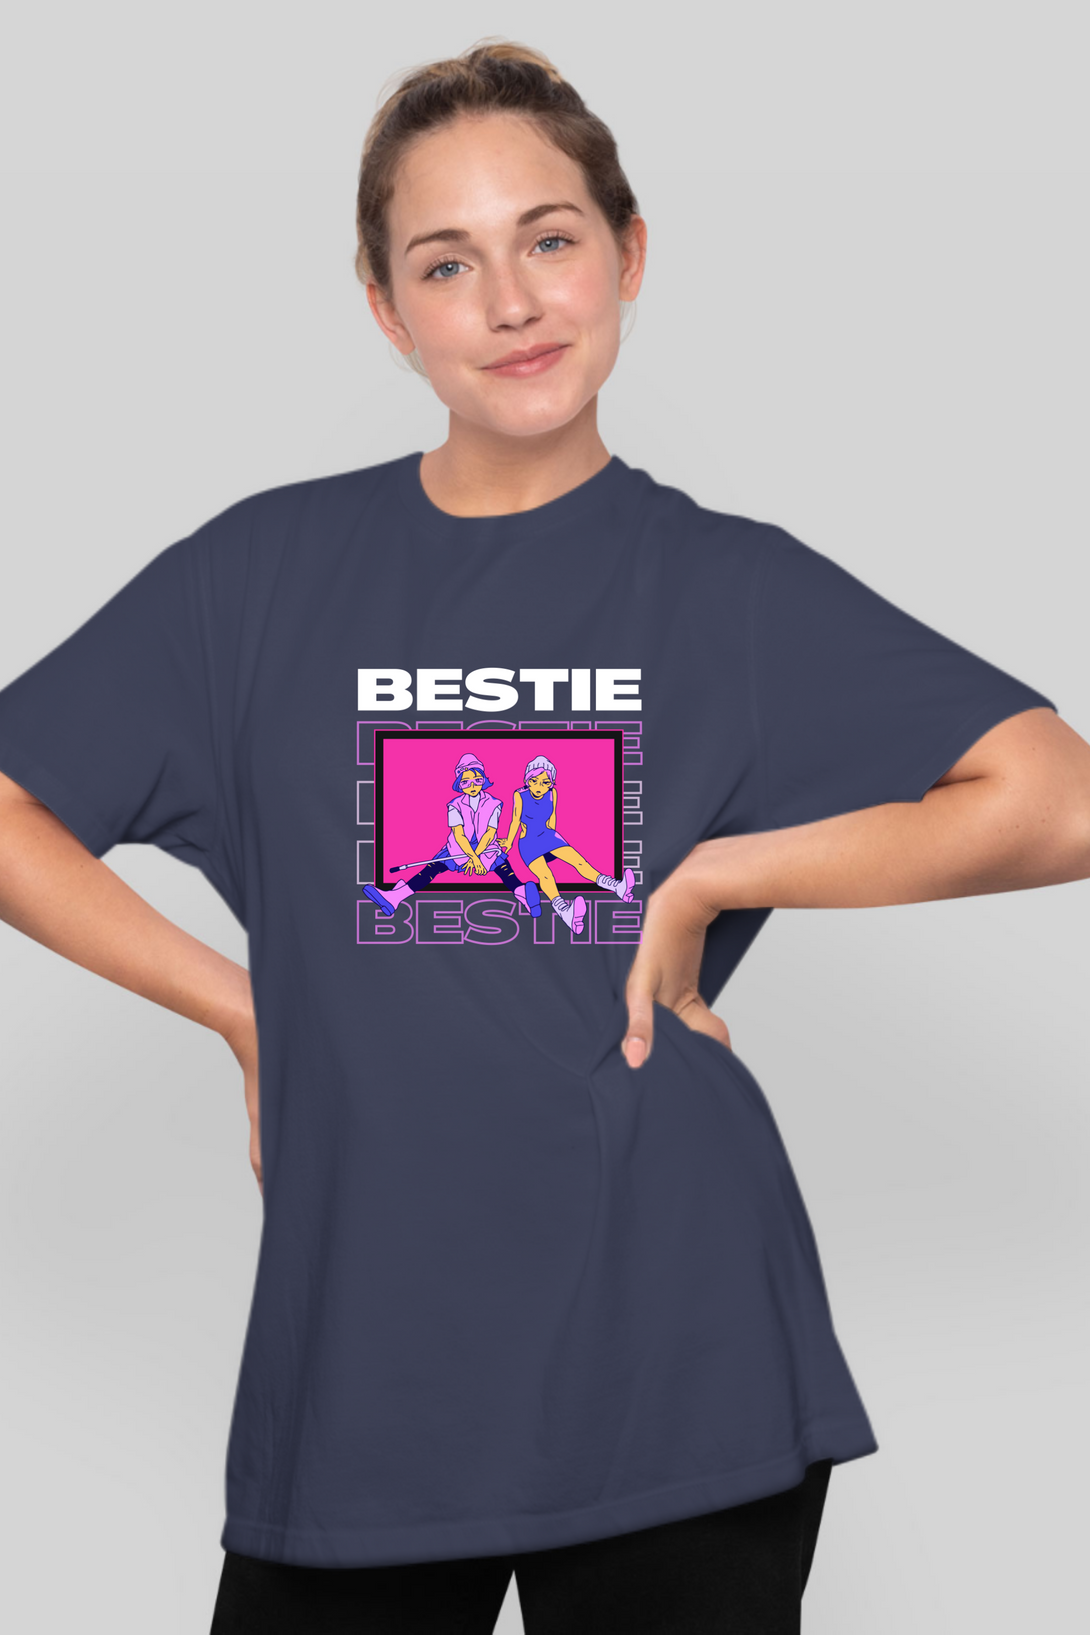 Bestie Bliss Printed Oversized T-Shirt For Women - WowWaves - 6